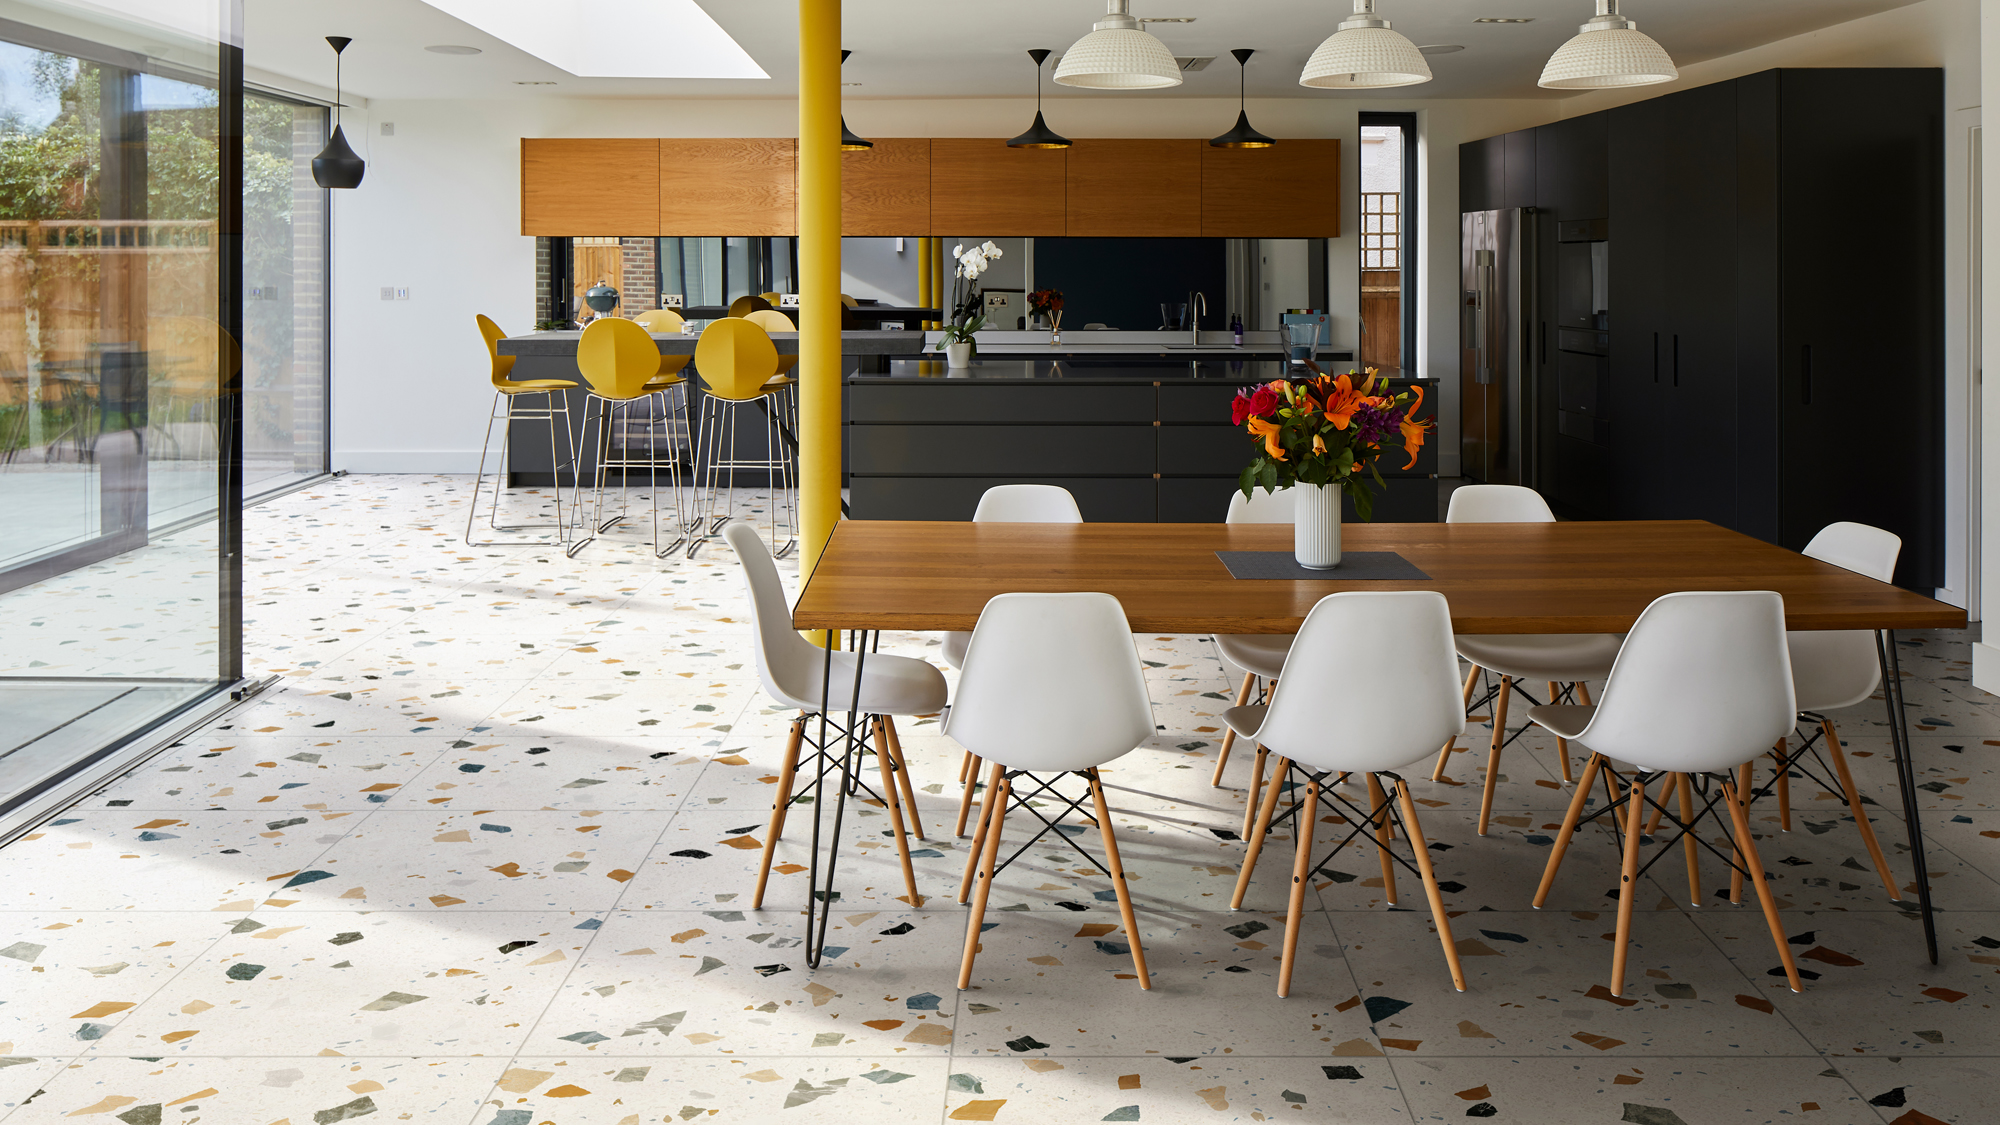 Kitchen Floor Tile Ideas 14 Durable, Blue And White Kitchen Floor Tiles Design